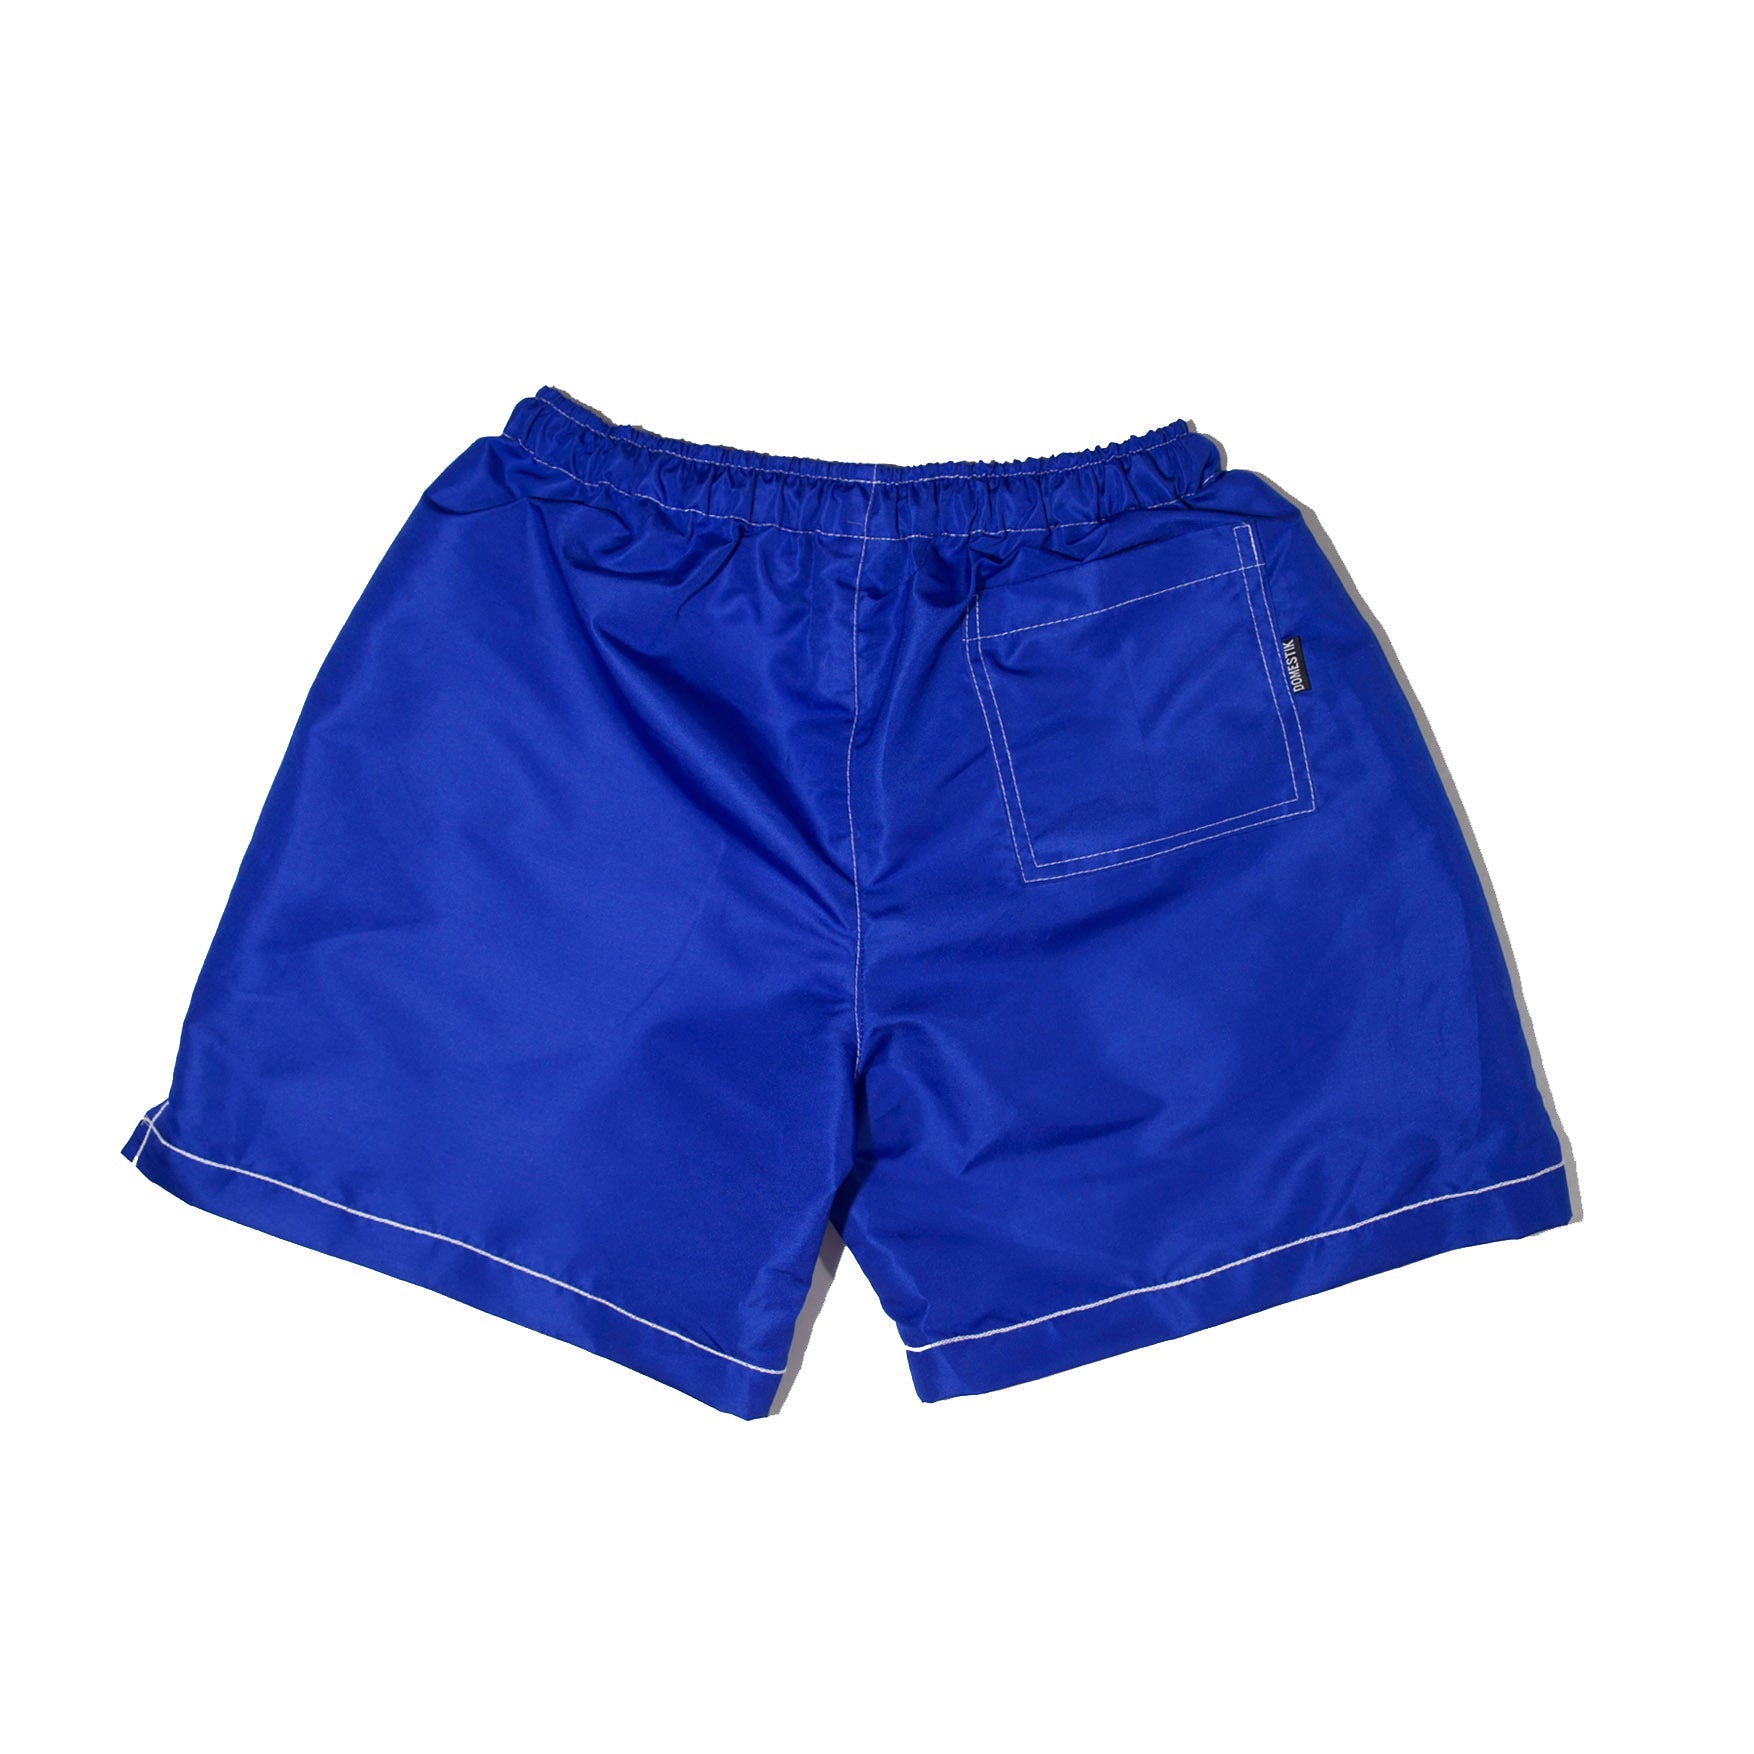 Mountain Shorts - Blue